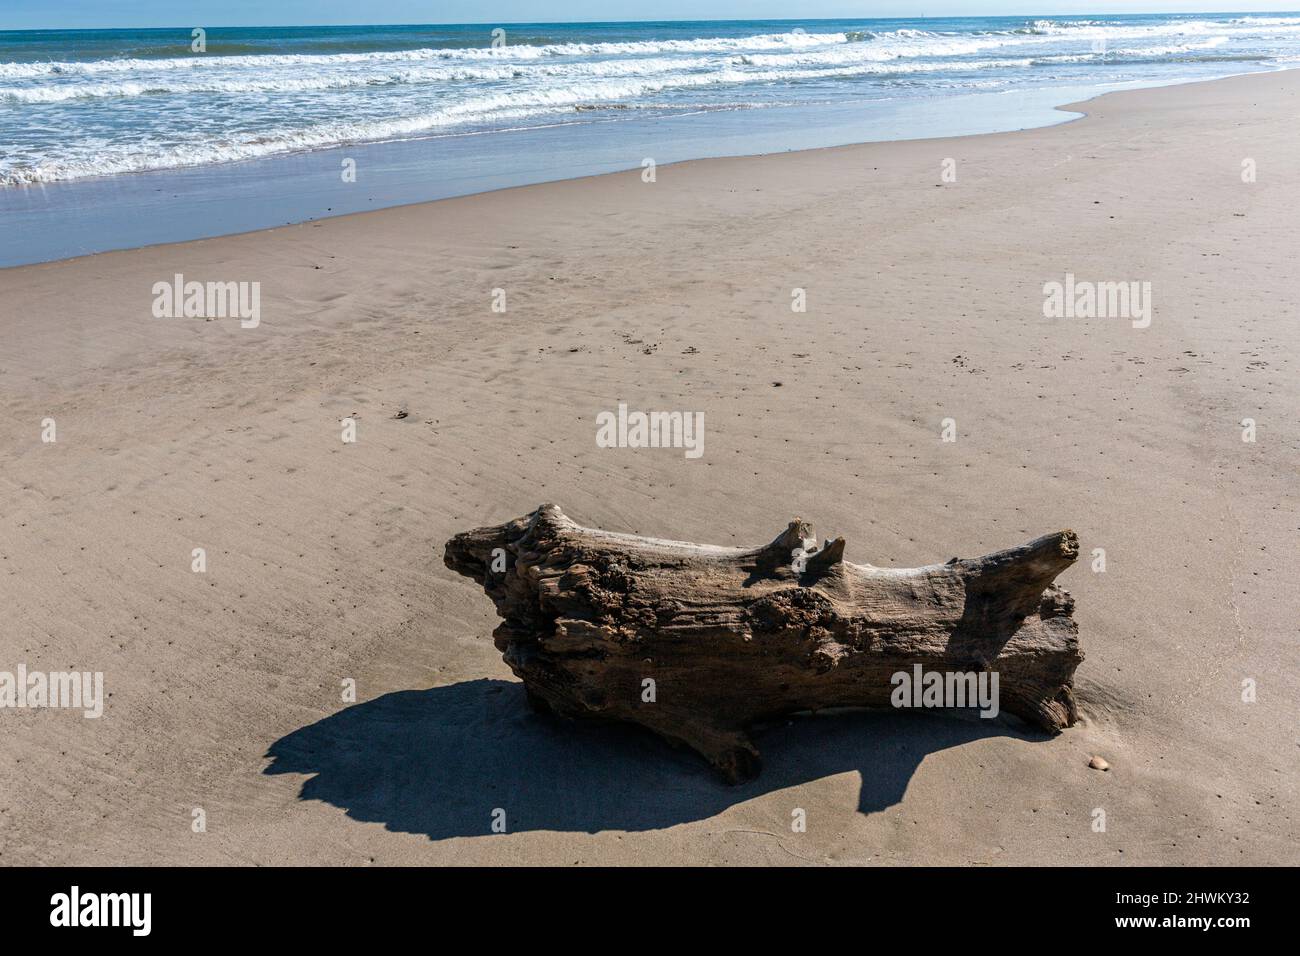 Wooden log in Platja de la Devesa, El Saler, Valencia province, Spain Stock Photo